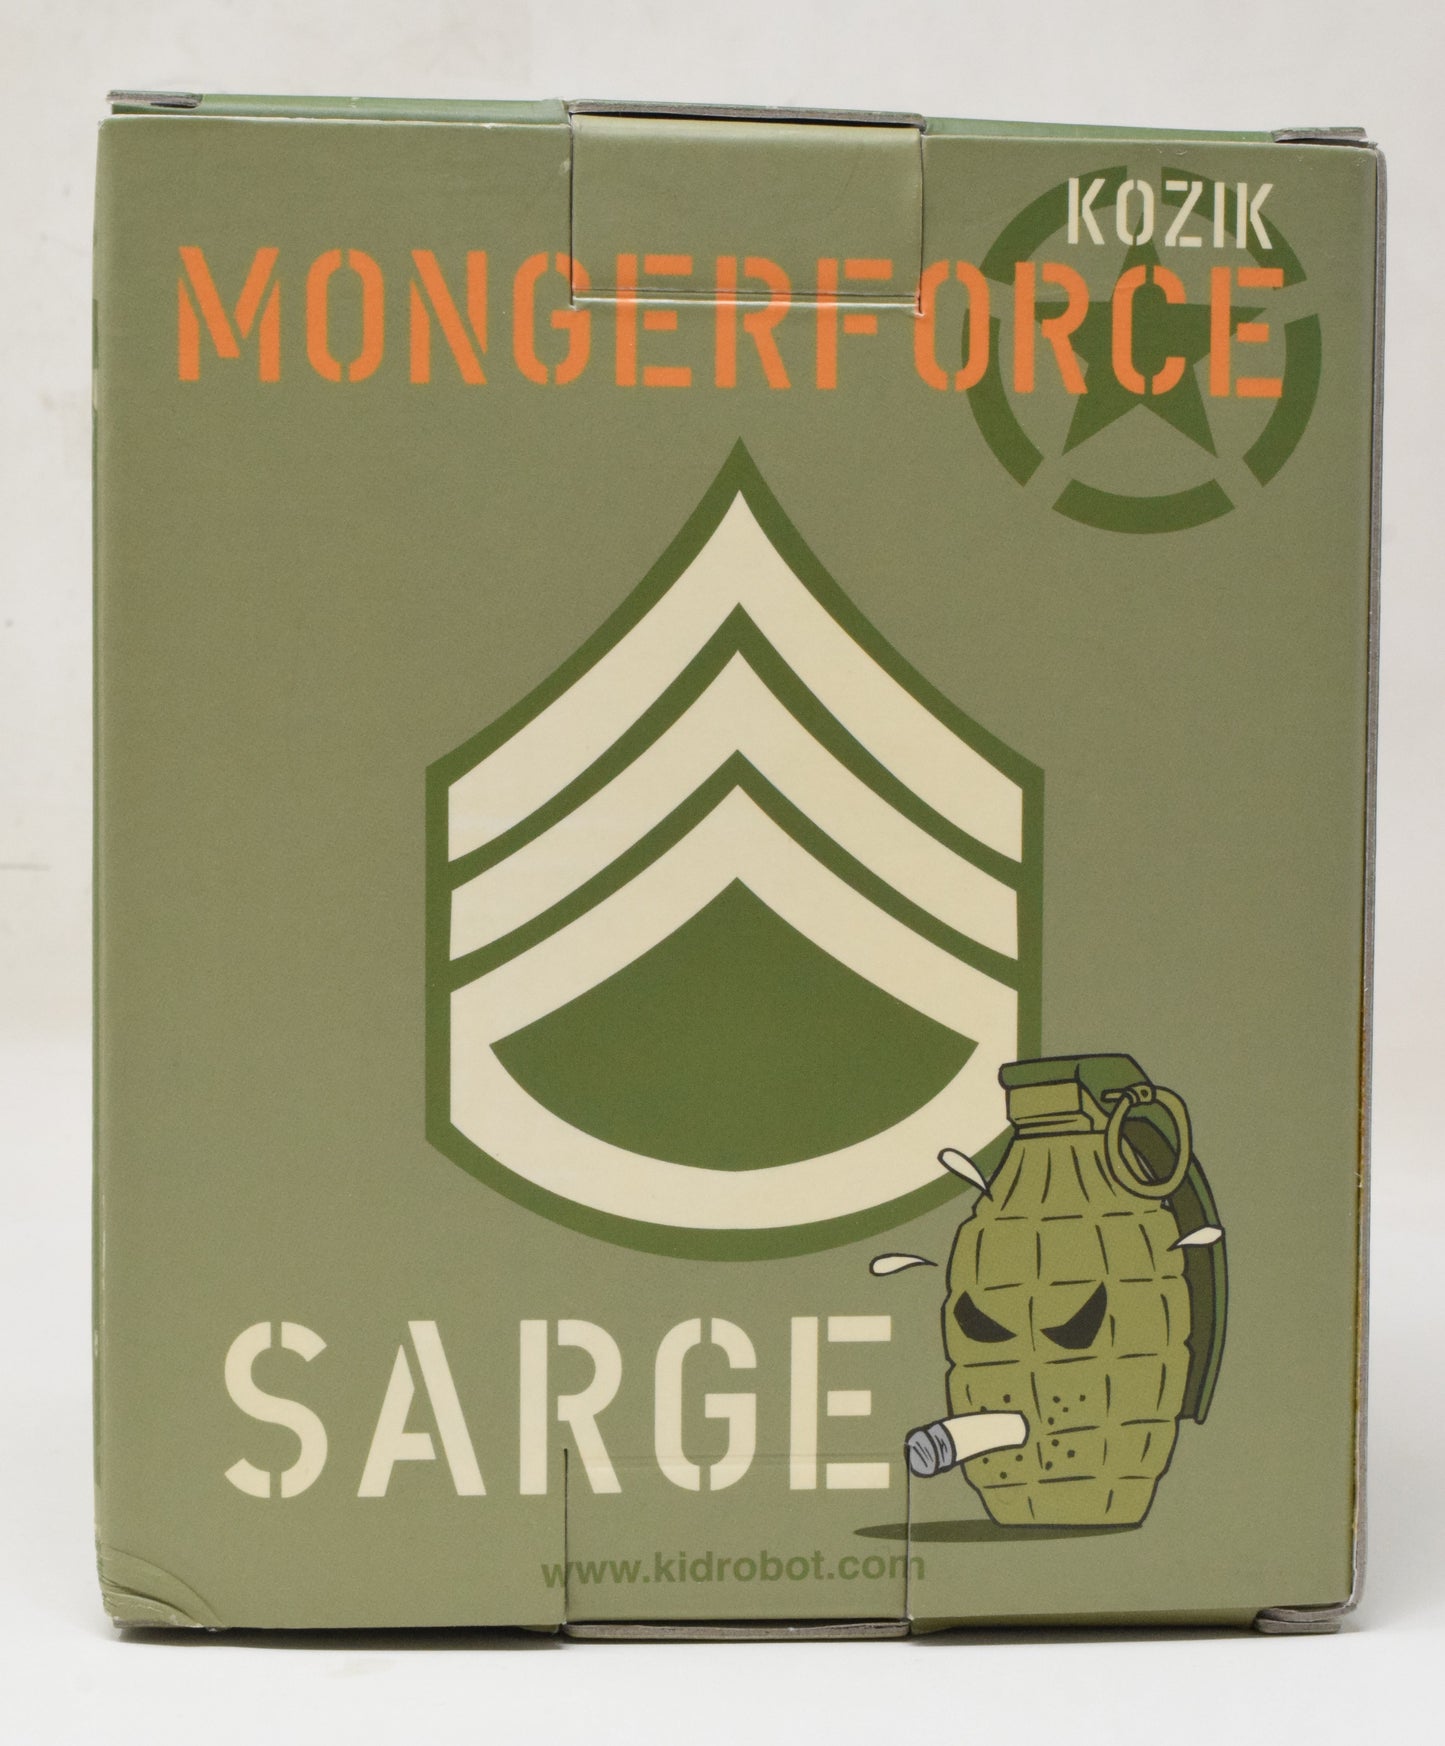 Frank Kozik Kidrobot Sarge Camo Desert Storm Mongerforce Mongers NIB